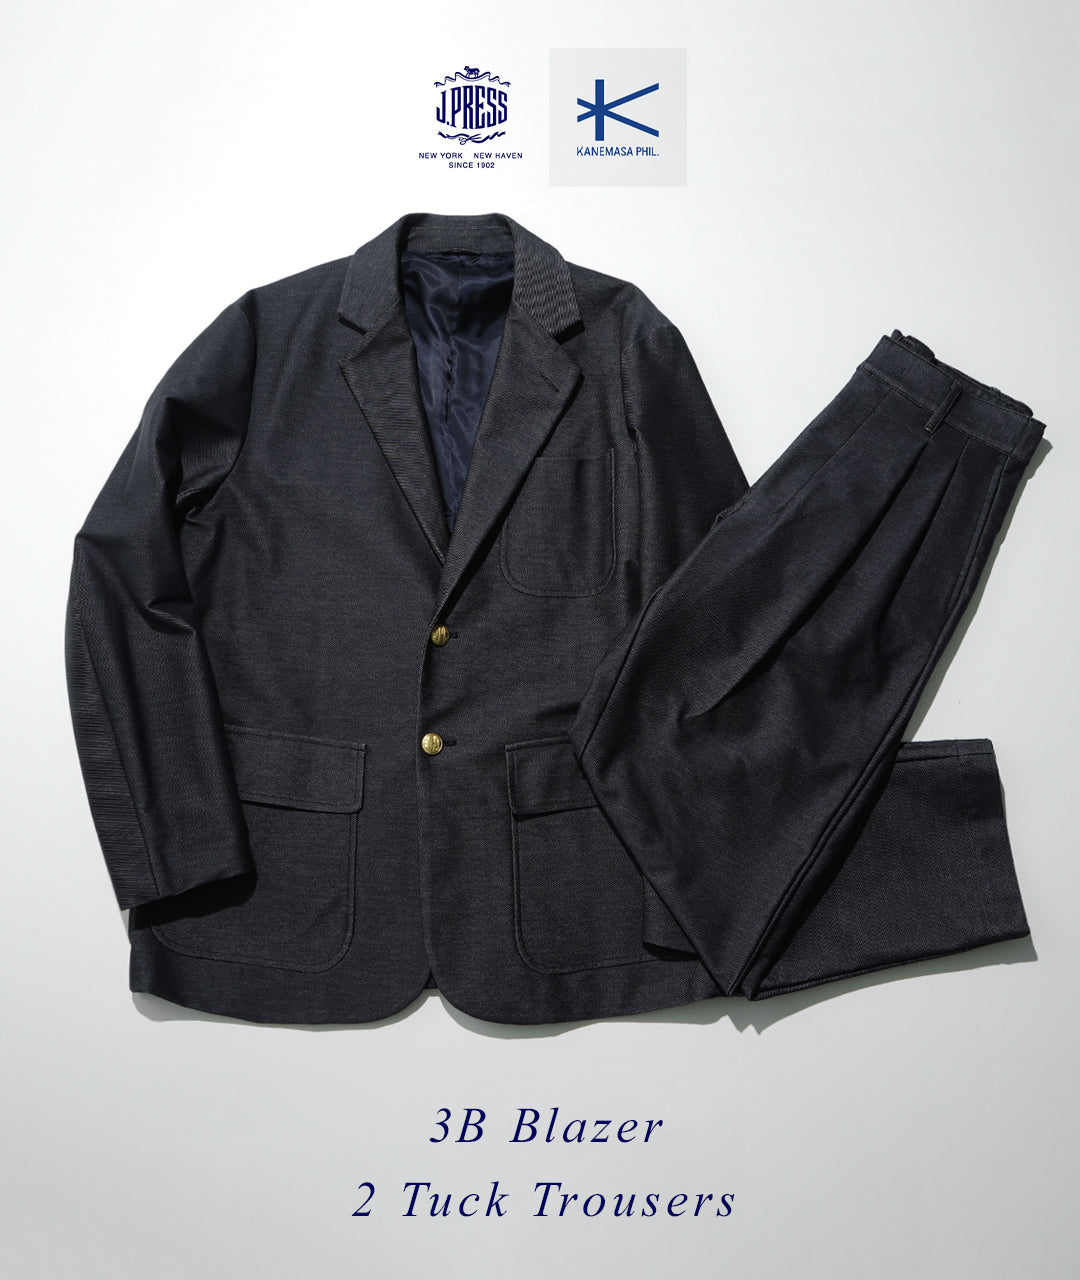 J.PRESS Jプレス × KANEMASA カネマサ 3B ブレザー 3B BLAZER シングル ジャケット BZOASA0070【送料無料】